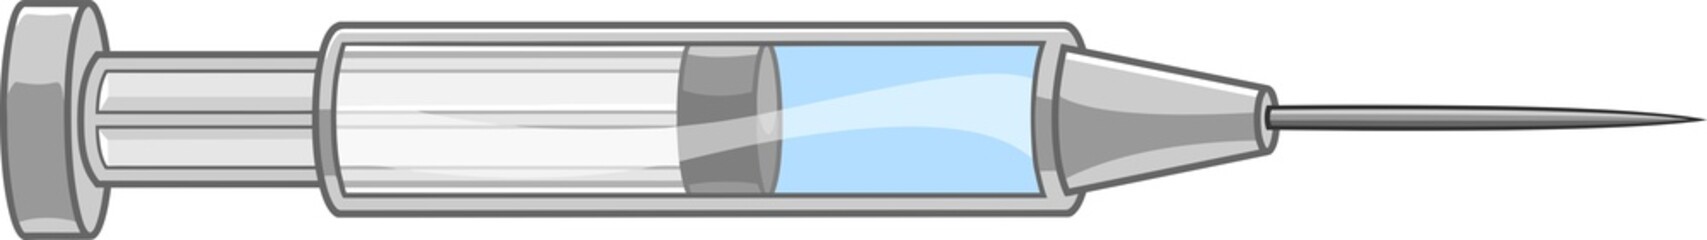 Cartoon Syringe. Vector Illustration Isolated On Transparent Background